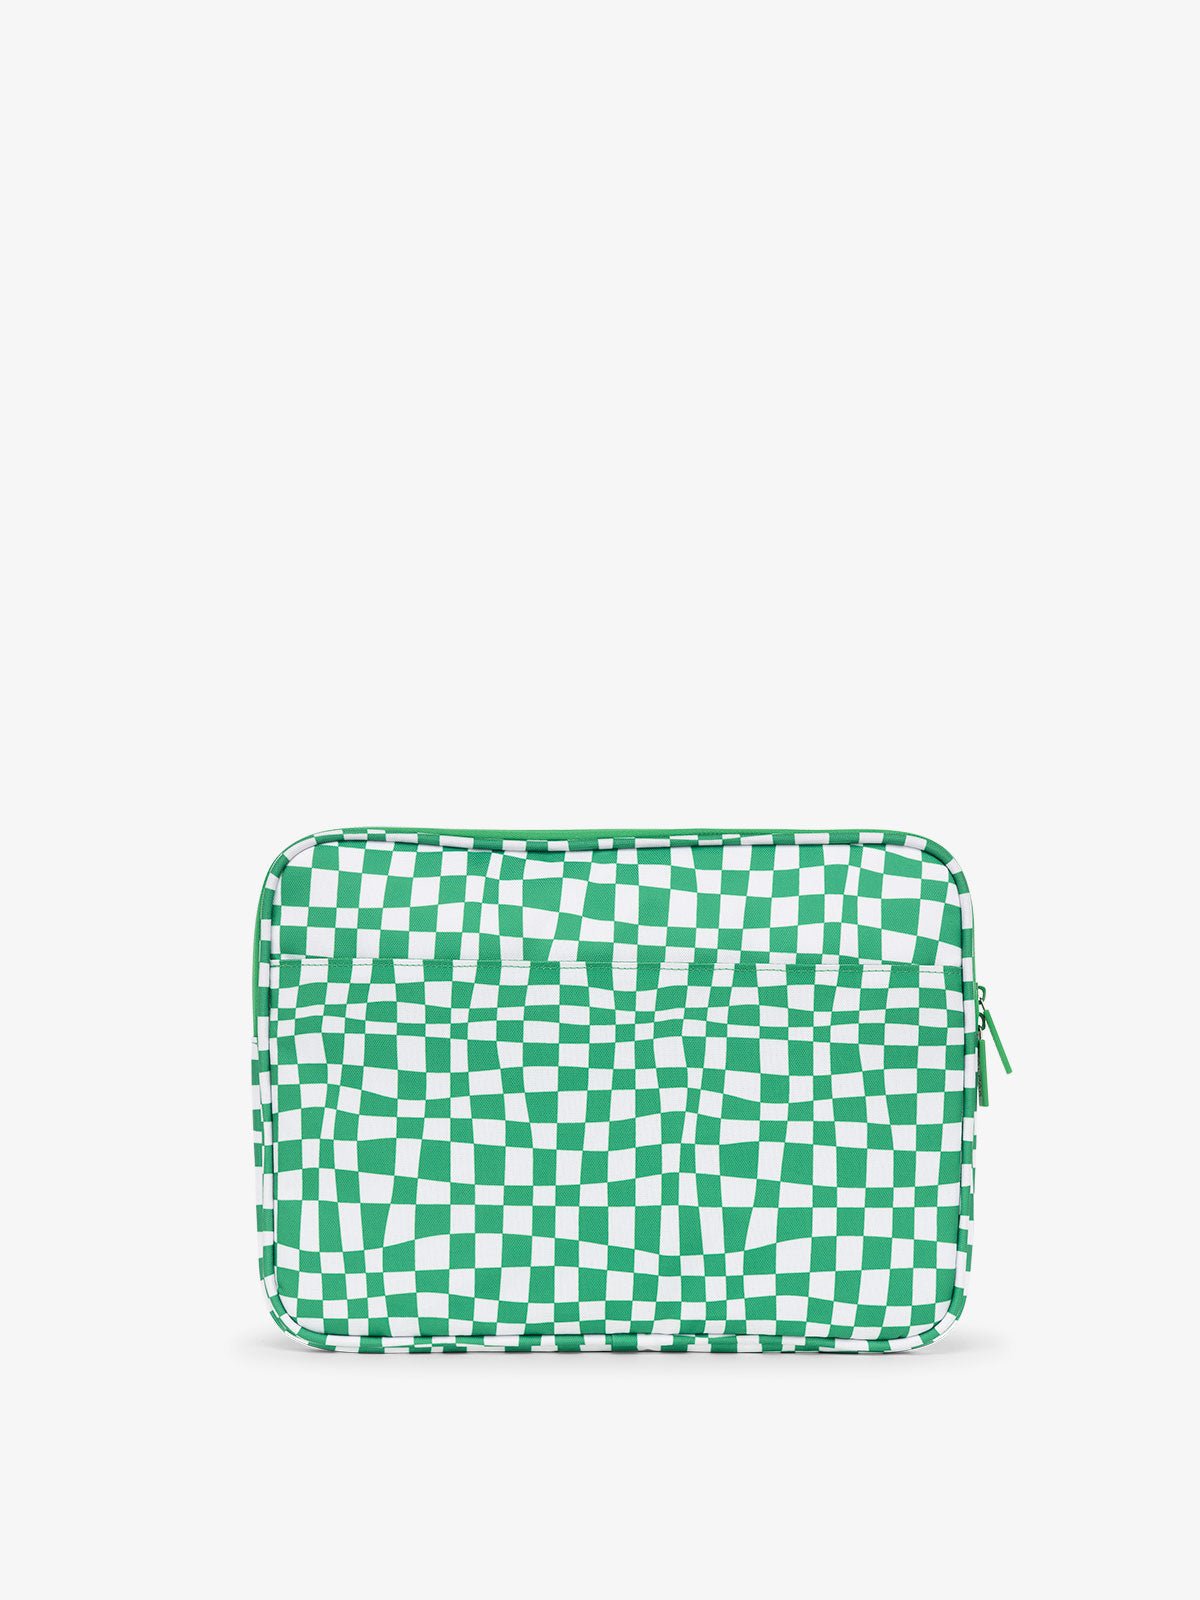 CALPAK 13-14 Inch padded Laptop sleeve for school in green checkerboard pattern